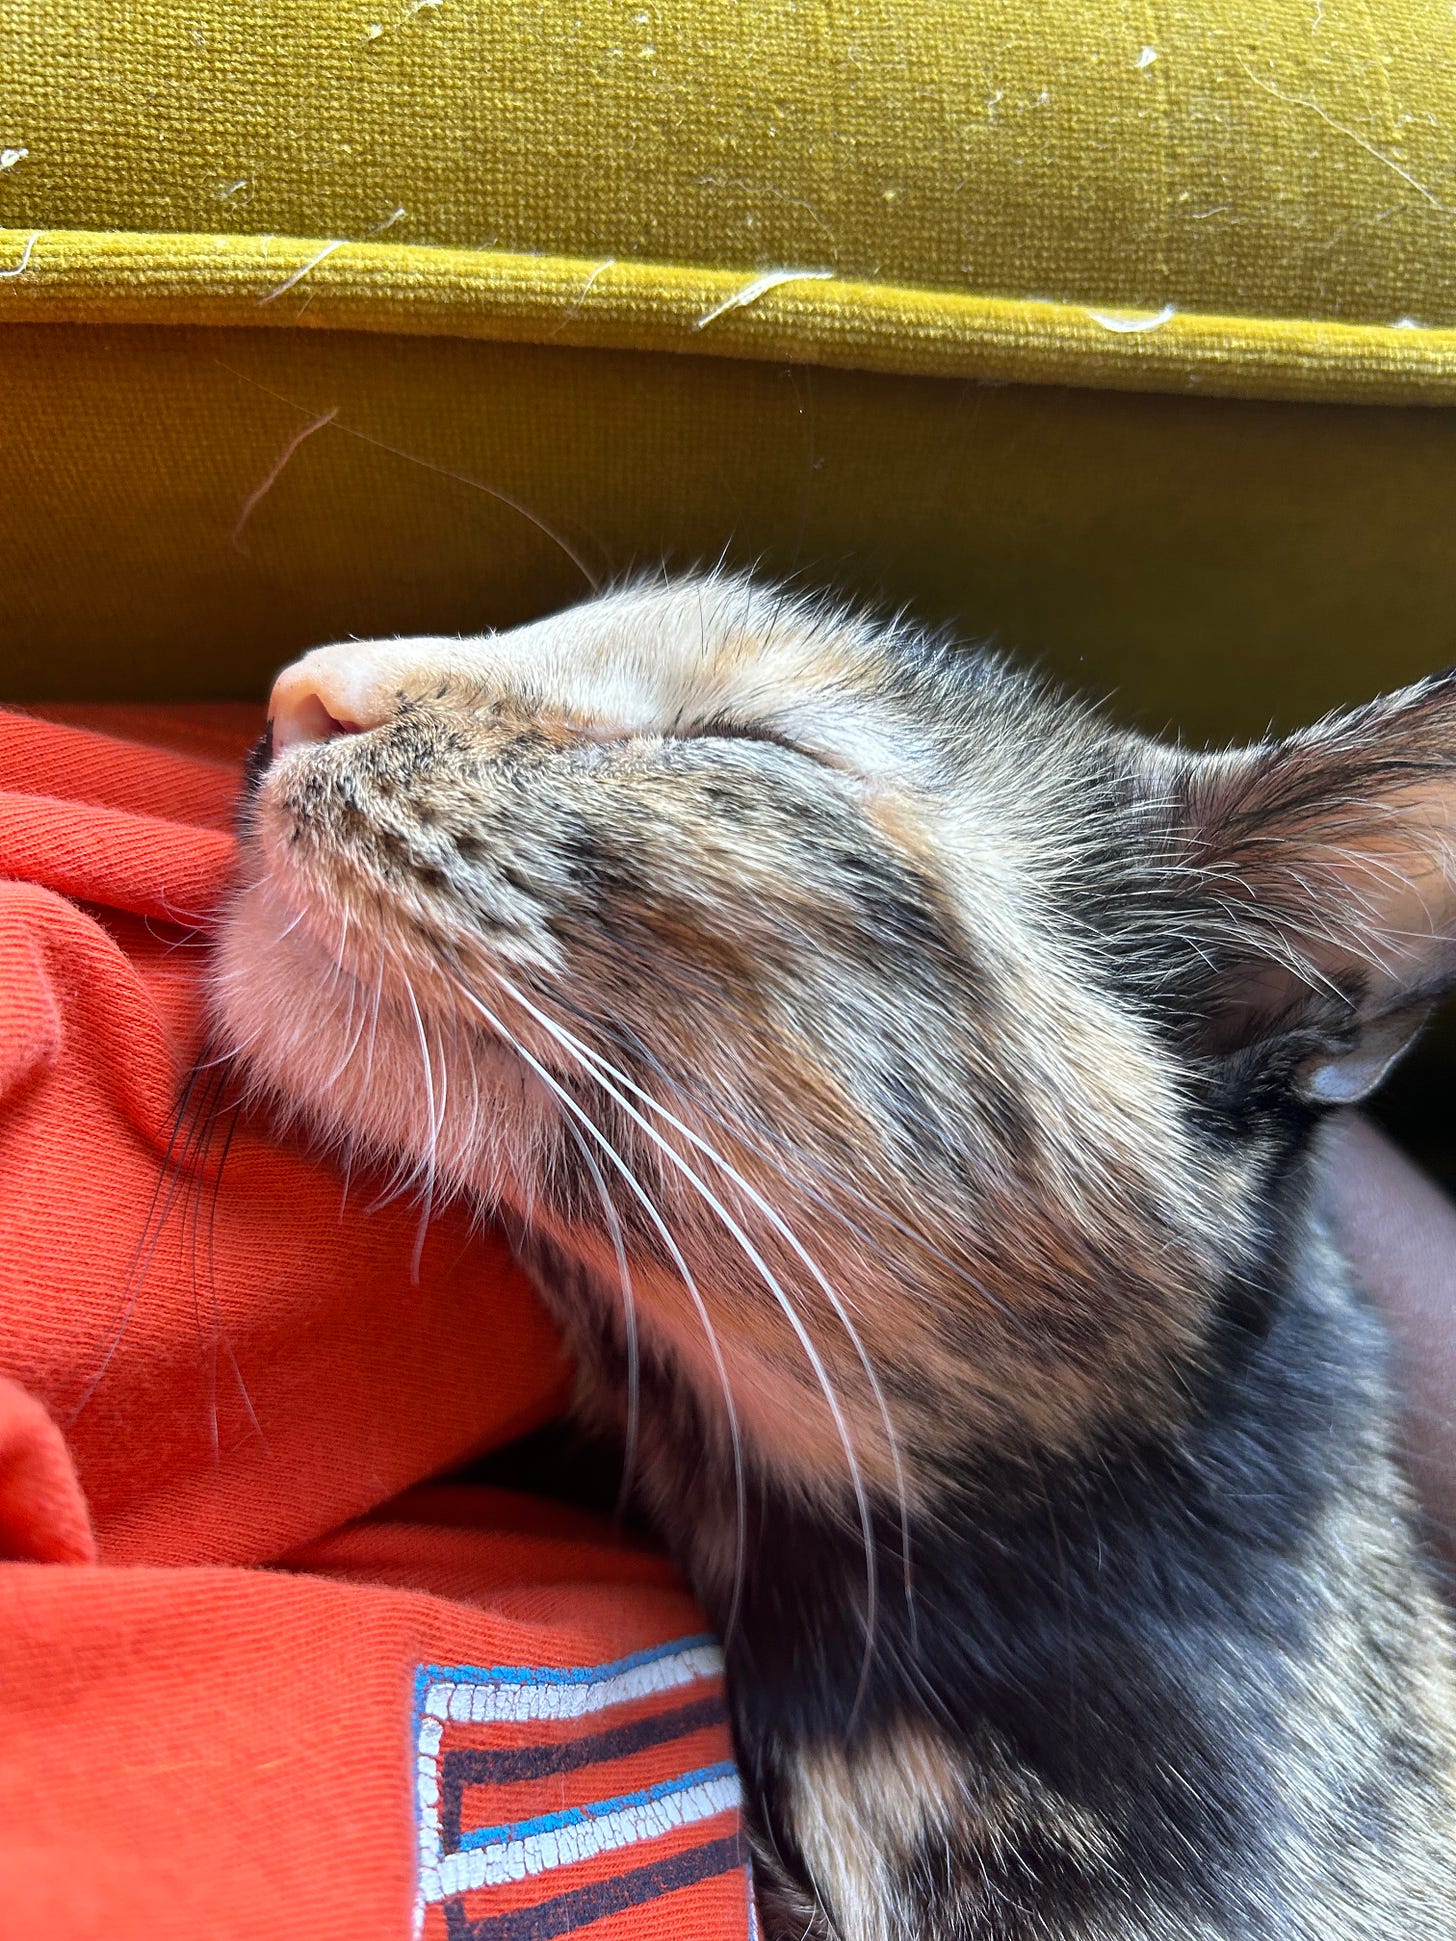 ismatu’s cat, Lemon, curls up on ismatu’s orange shirt. she is having a lovely afternoon nap in the sun. 